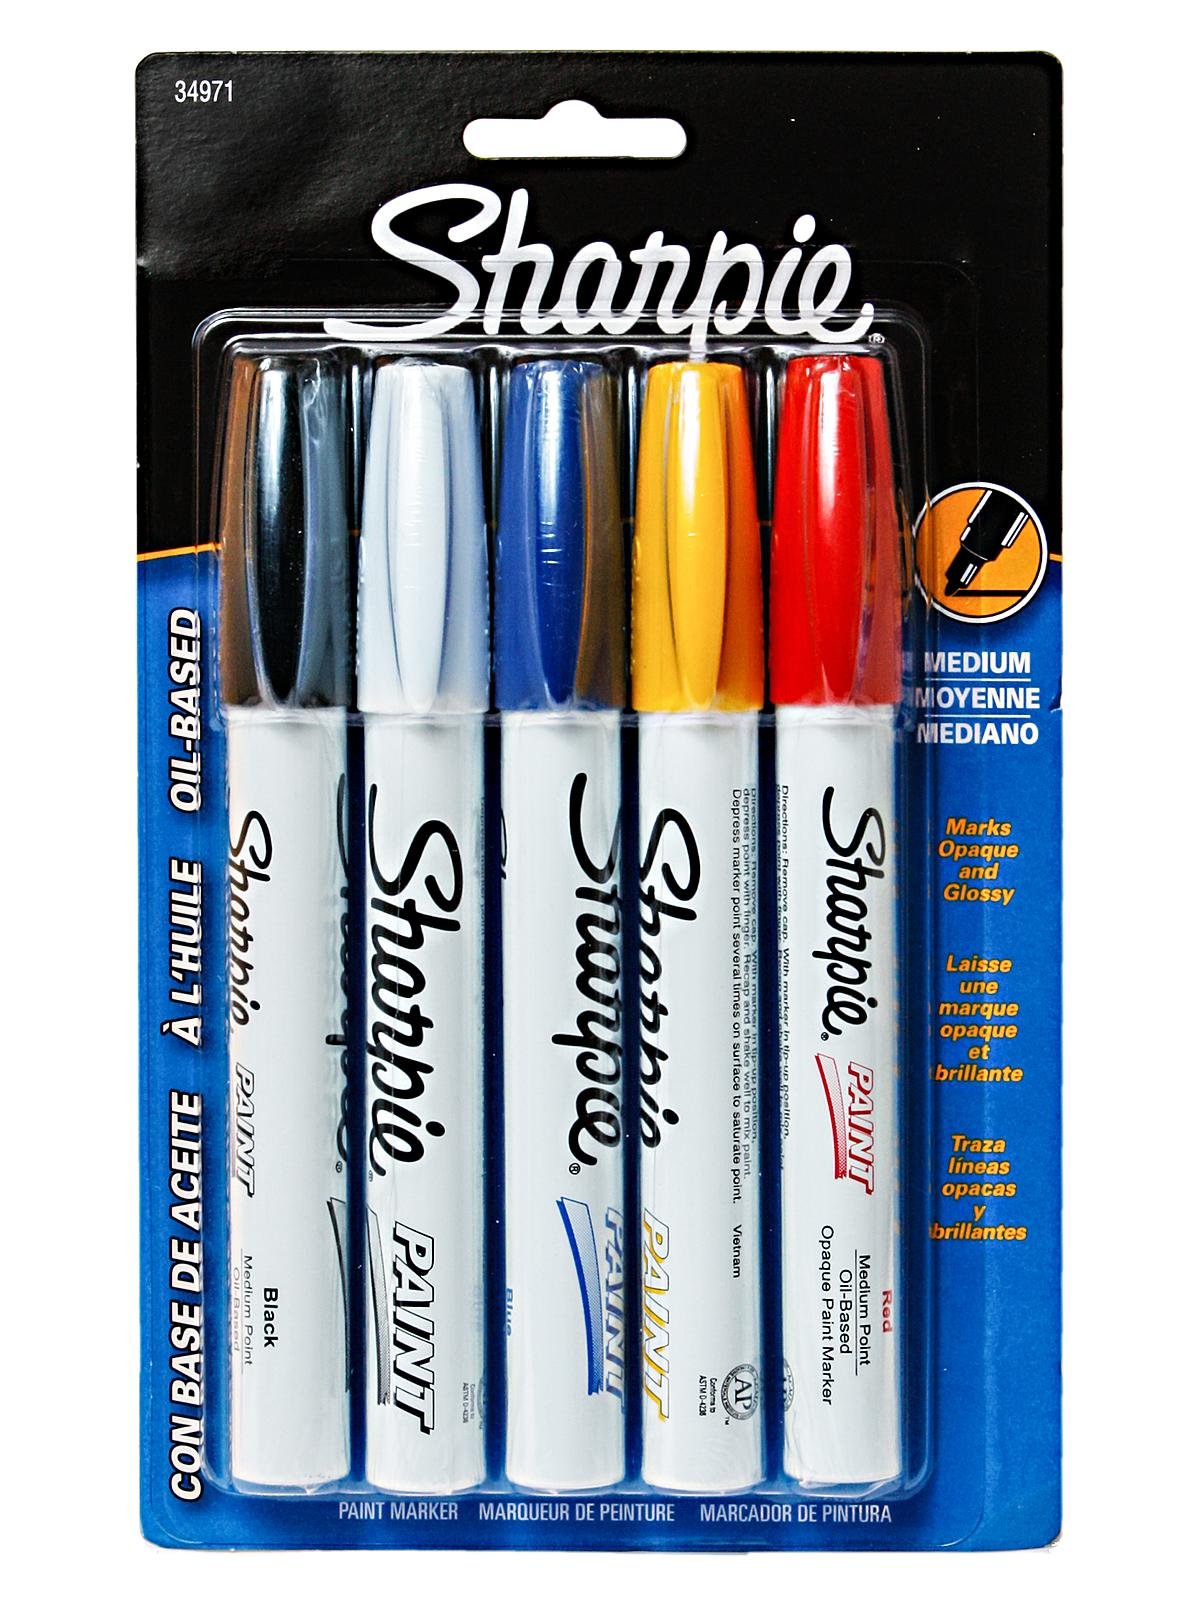 Sharpie - Paint Oil-Based Paint Markers